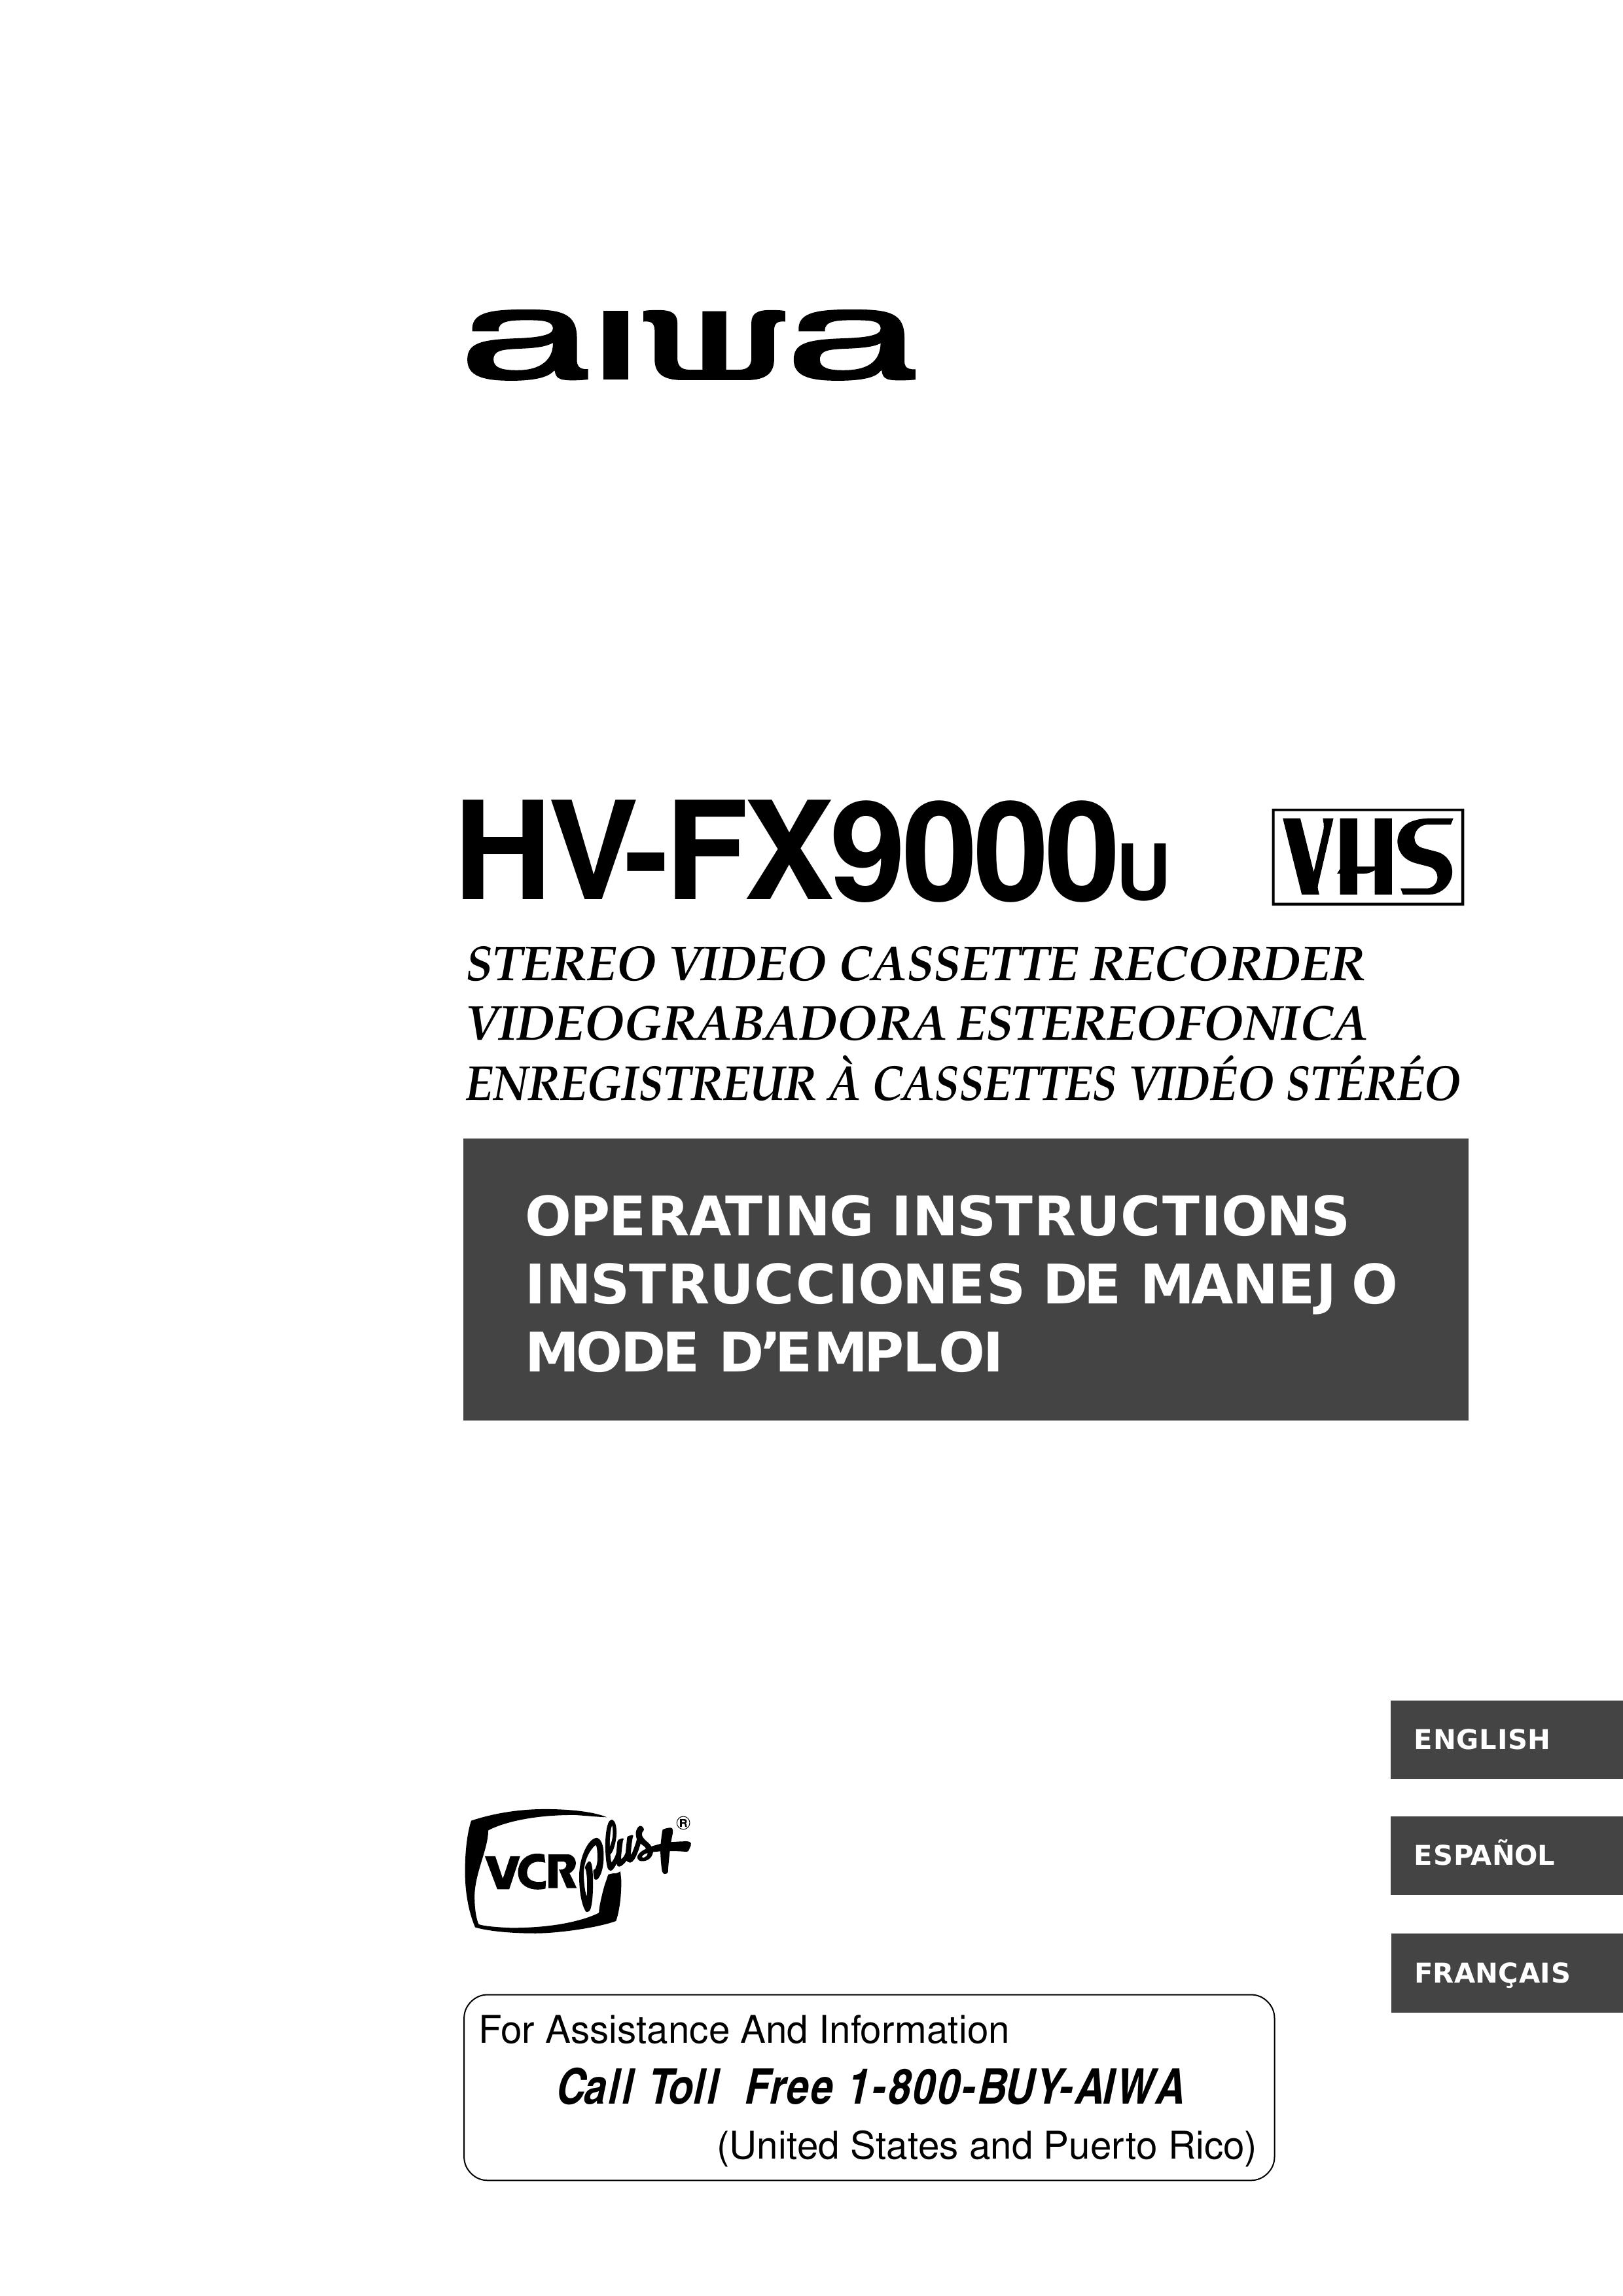 Aiwa HV-FX9000U Camcorder User Manual (Page 1)